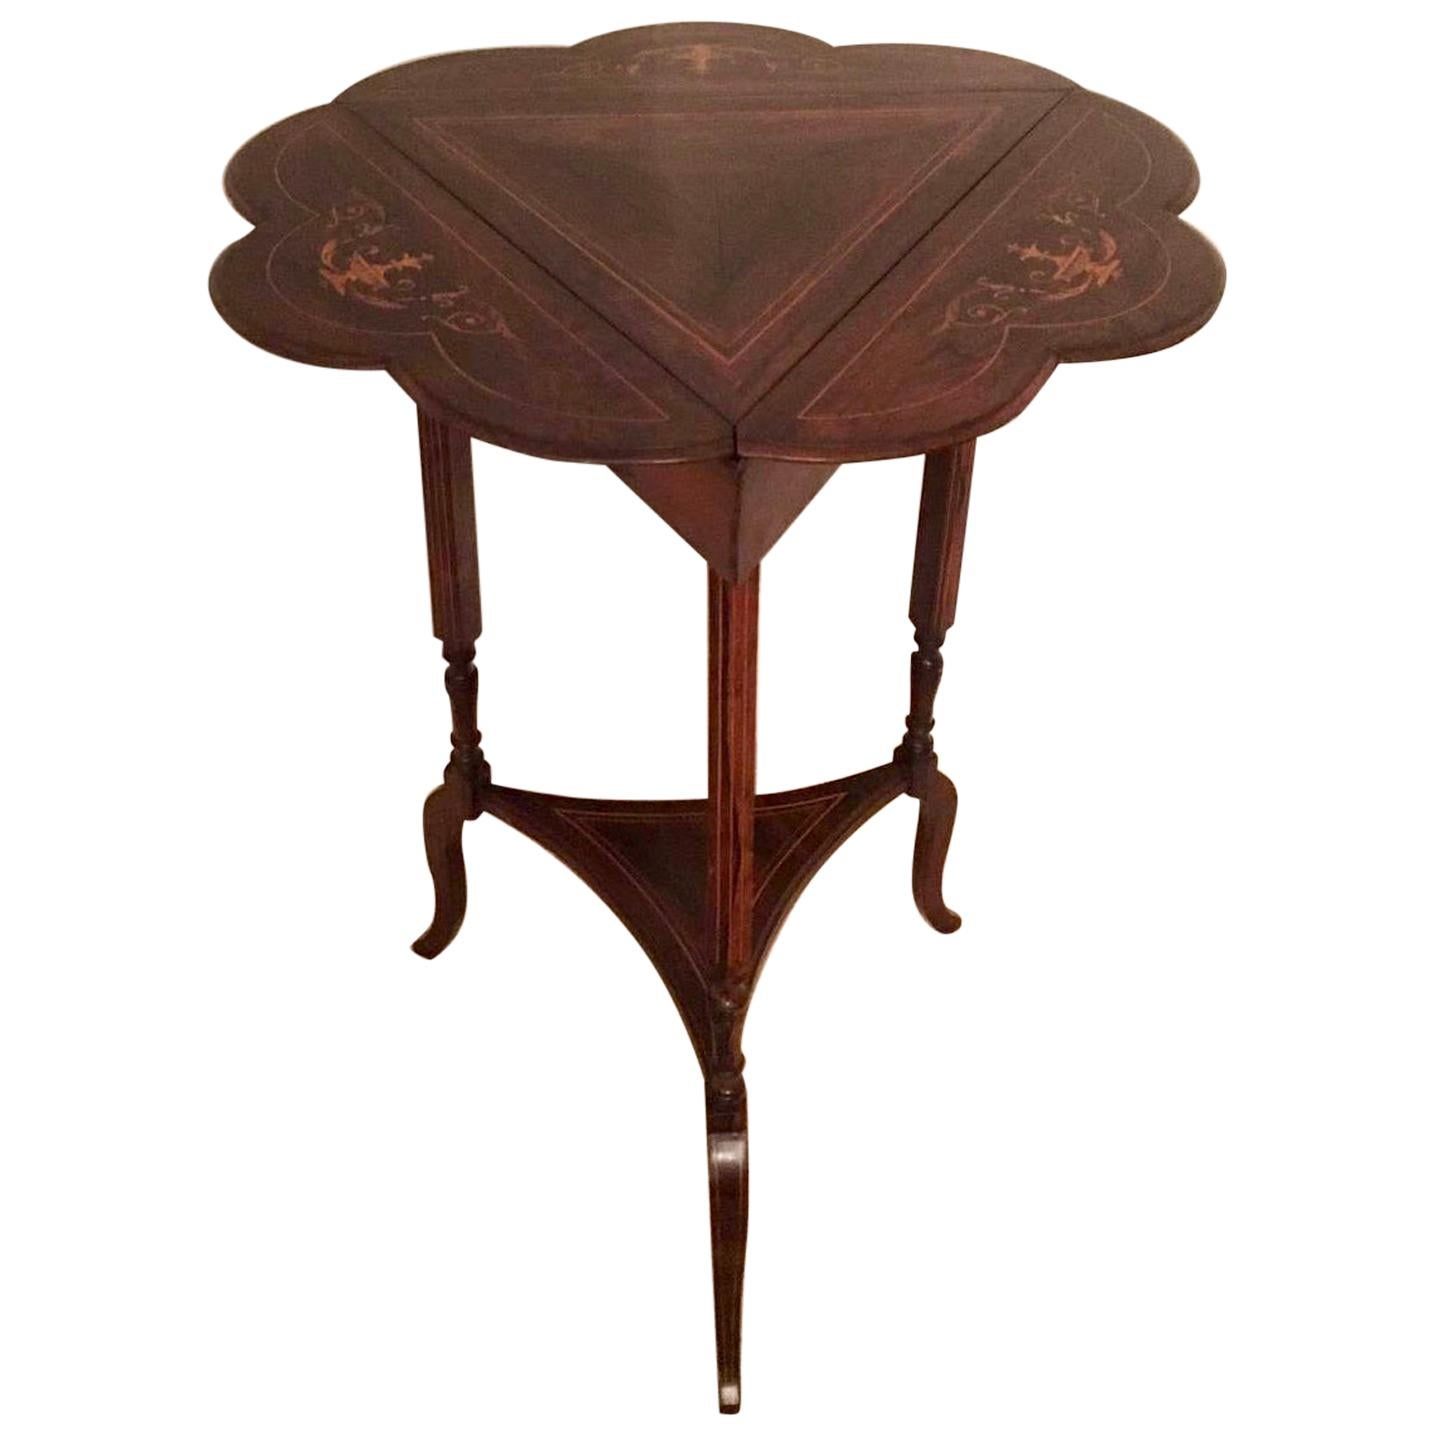  Antique Edwardian Inlaid Drop Leaf Table For Sale